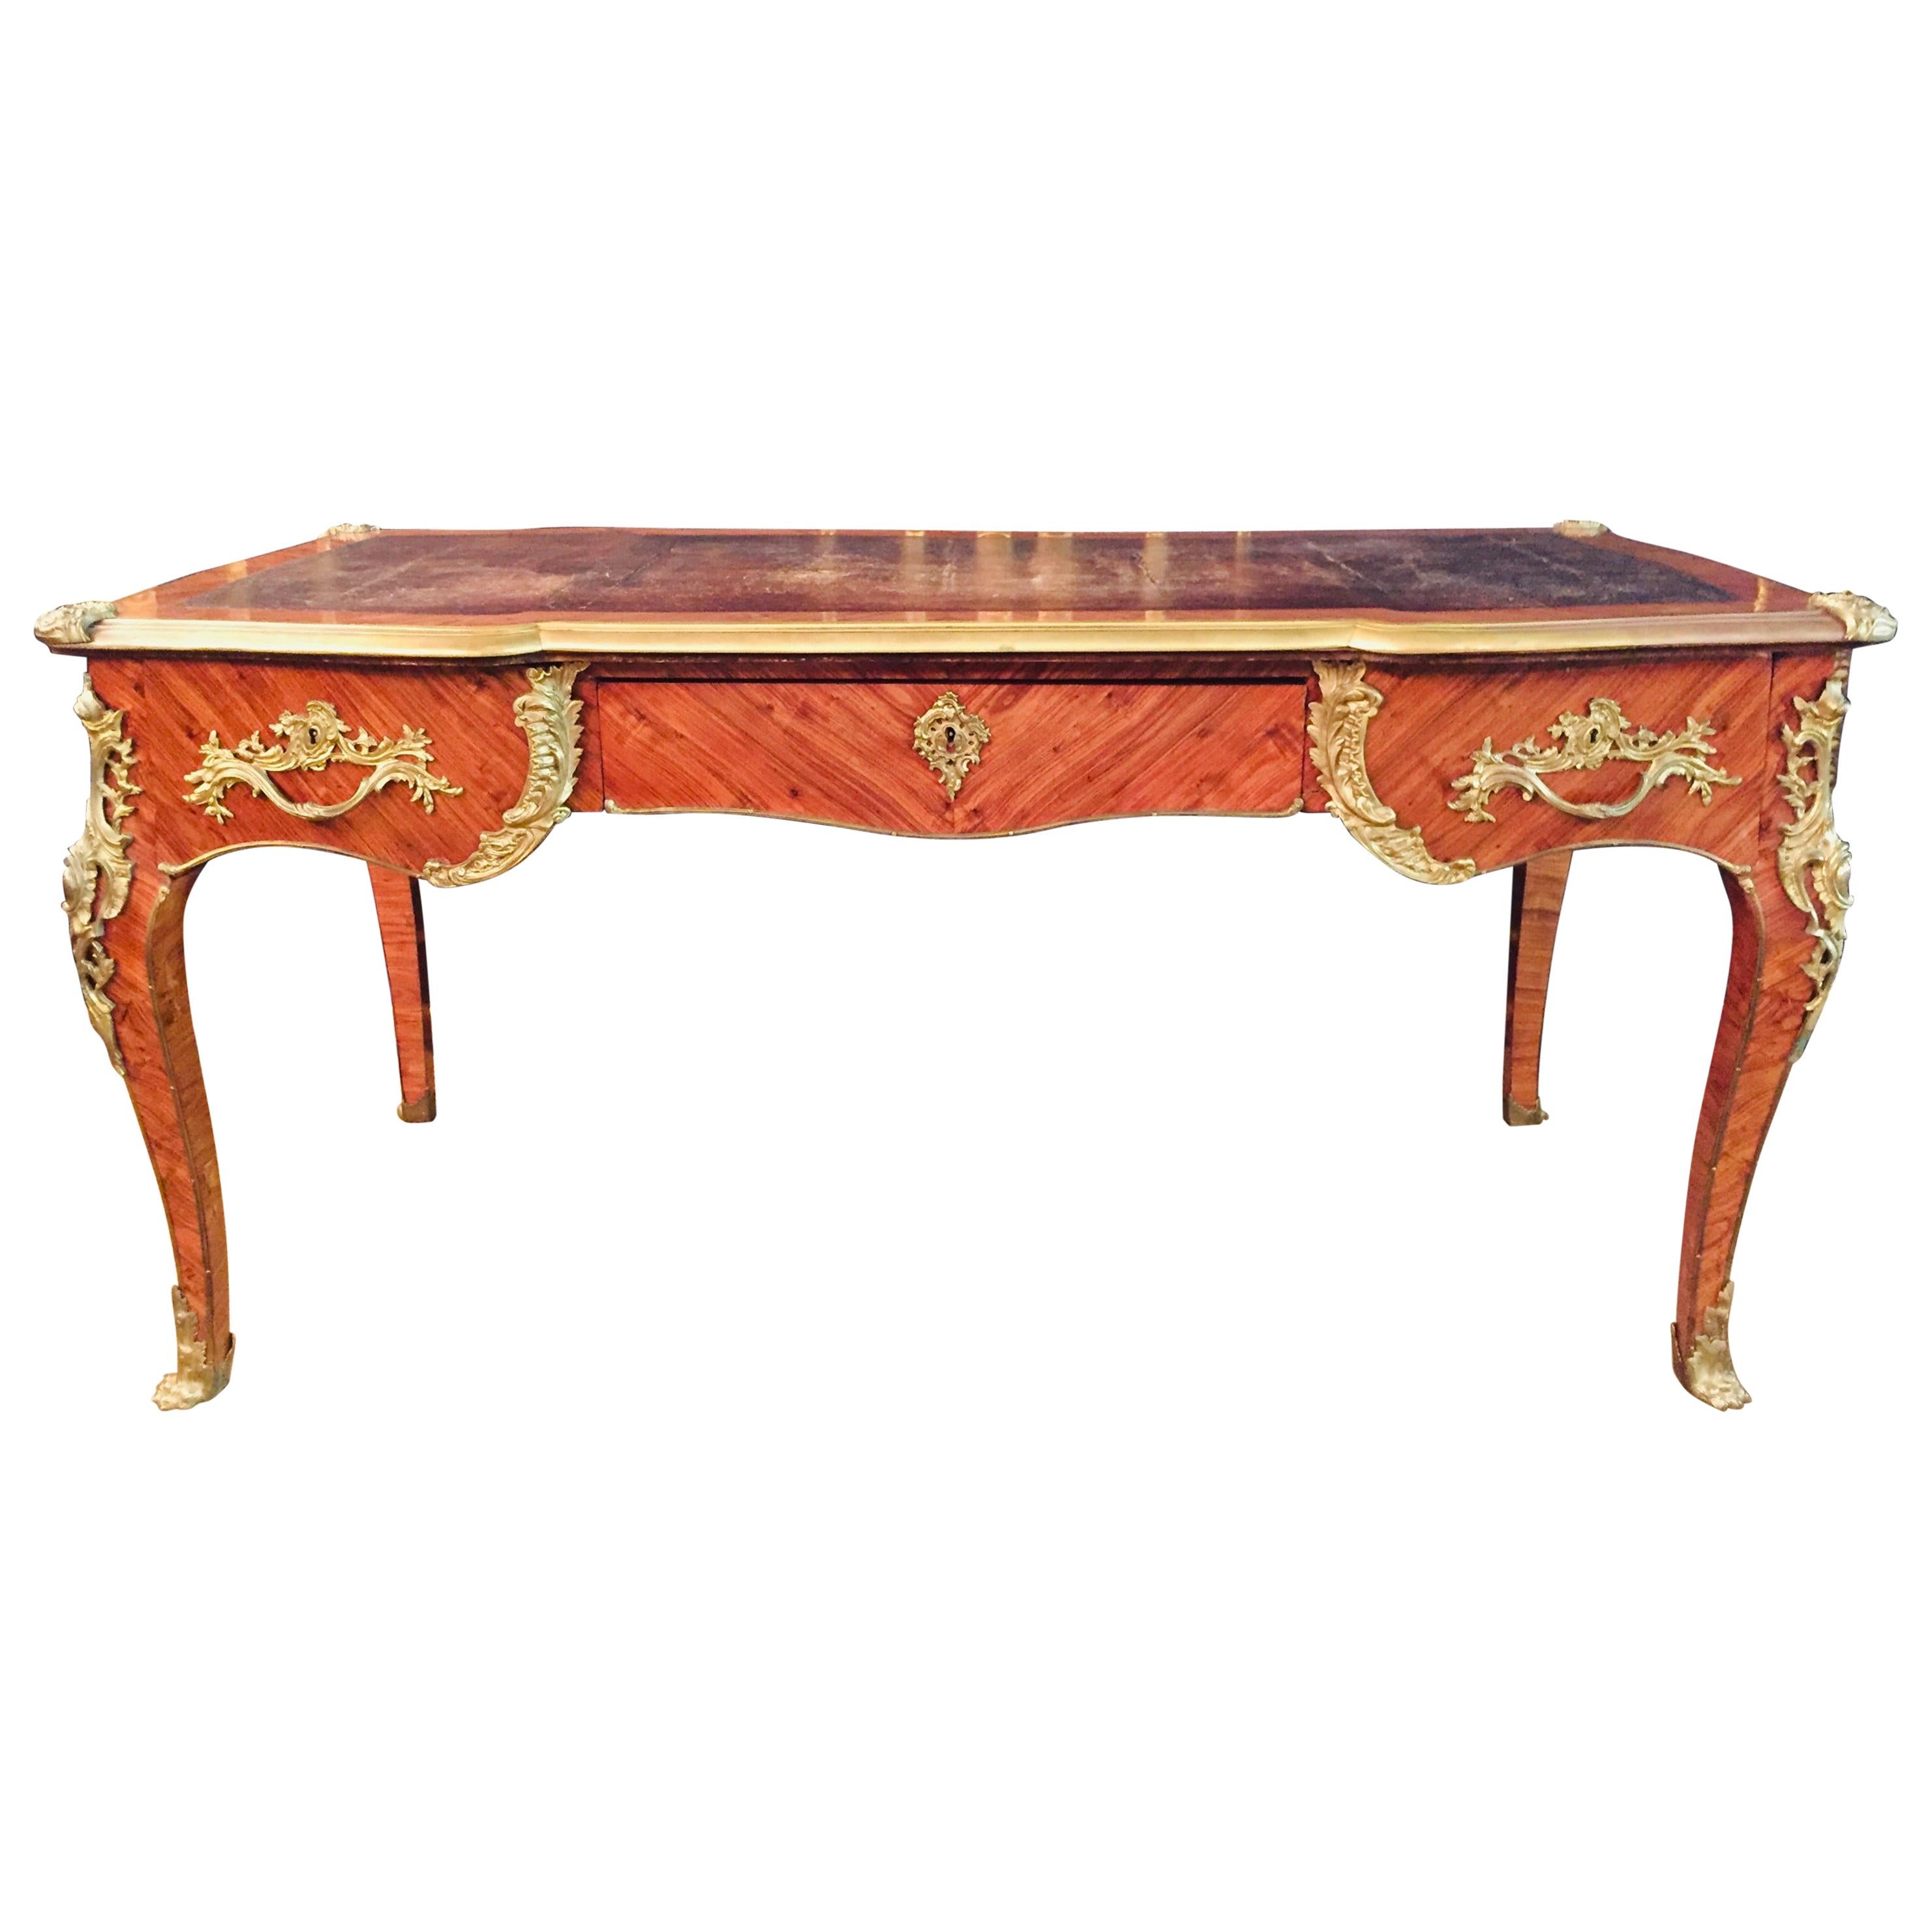 Antique 19th Century Louis XV Style Bureau Plat Writing Table Mahogany veneer